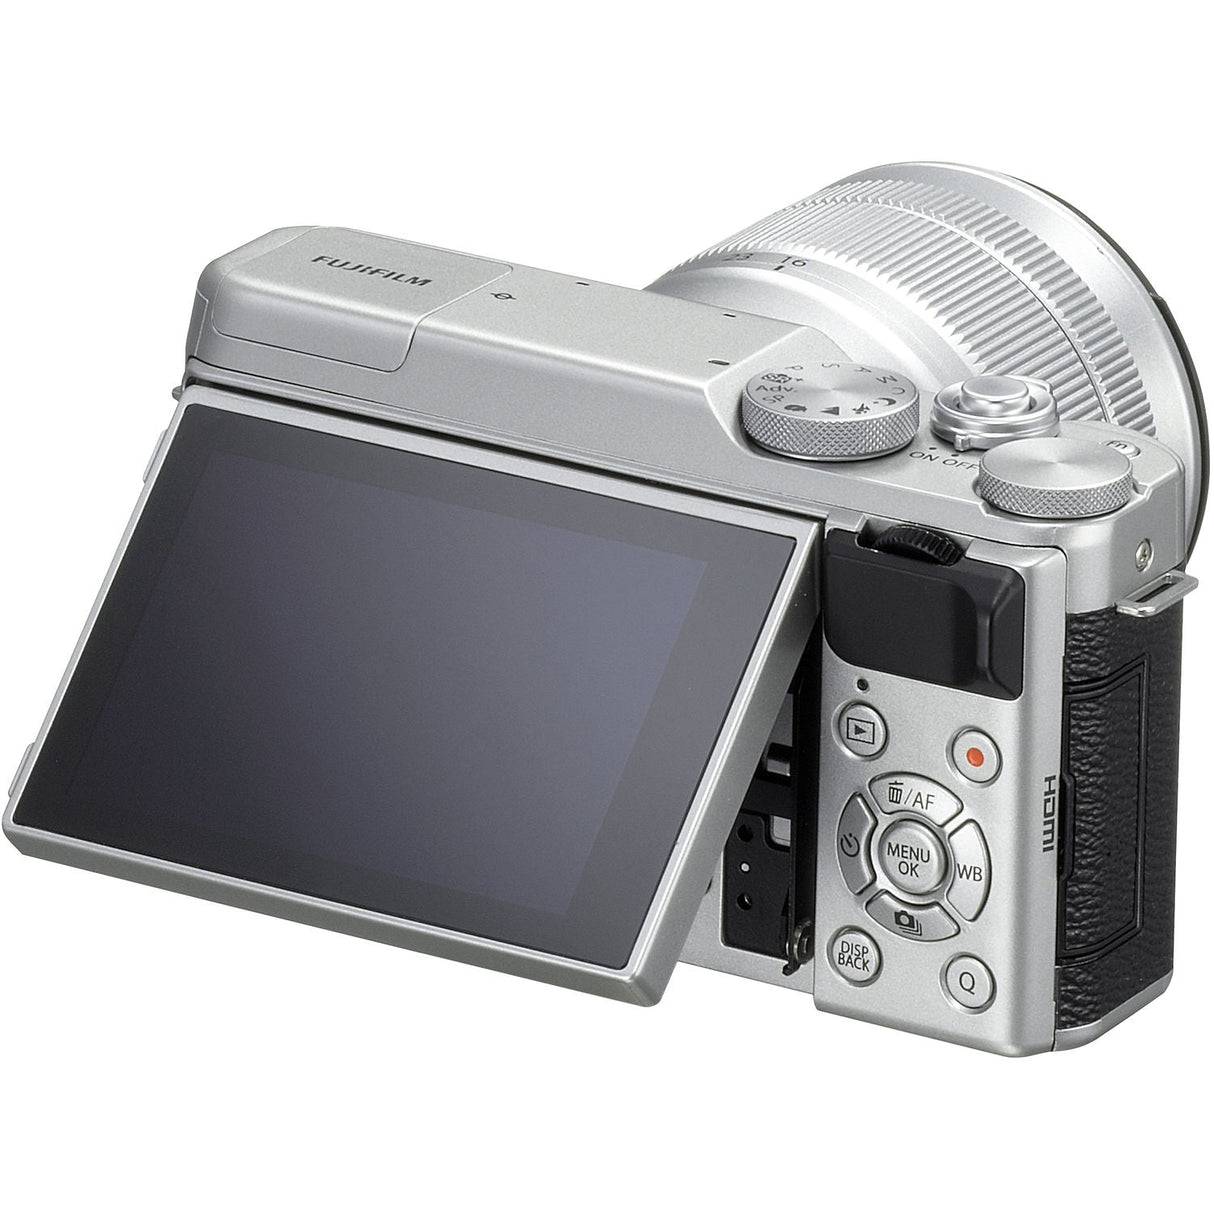 FUJIFILM X-A10 Mirrorless Digital Camera with 16-50mm Lens